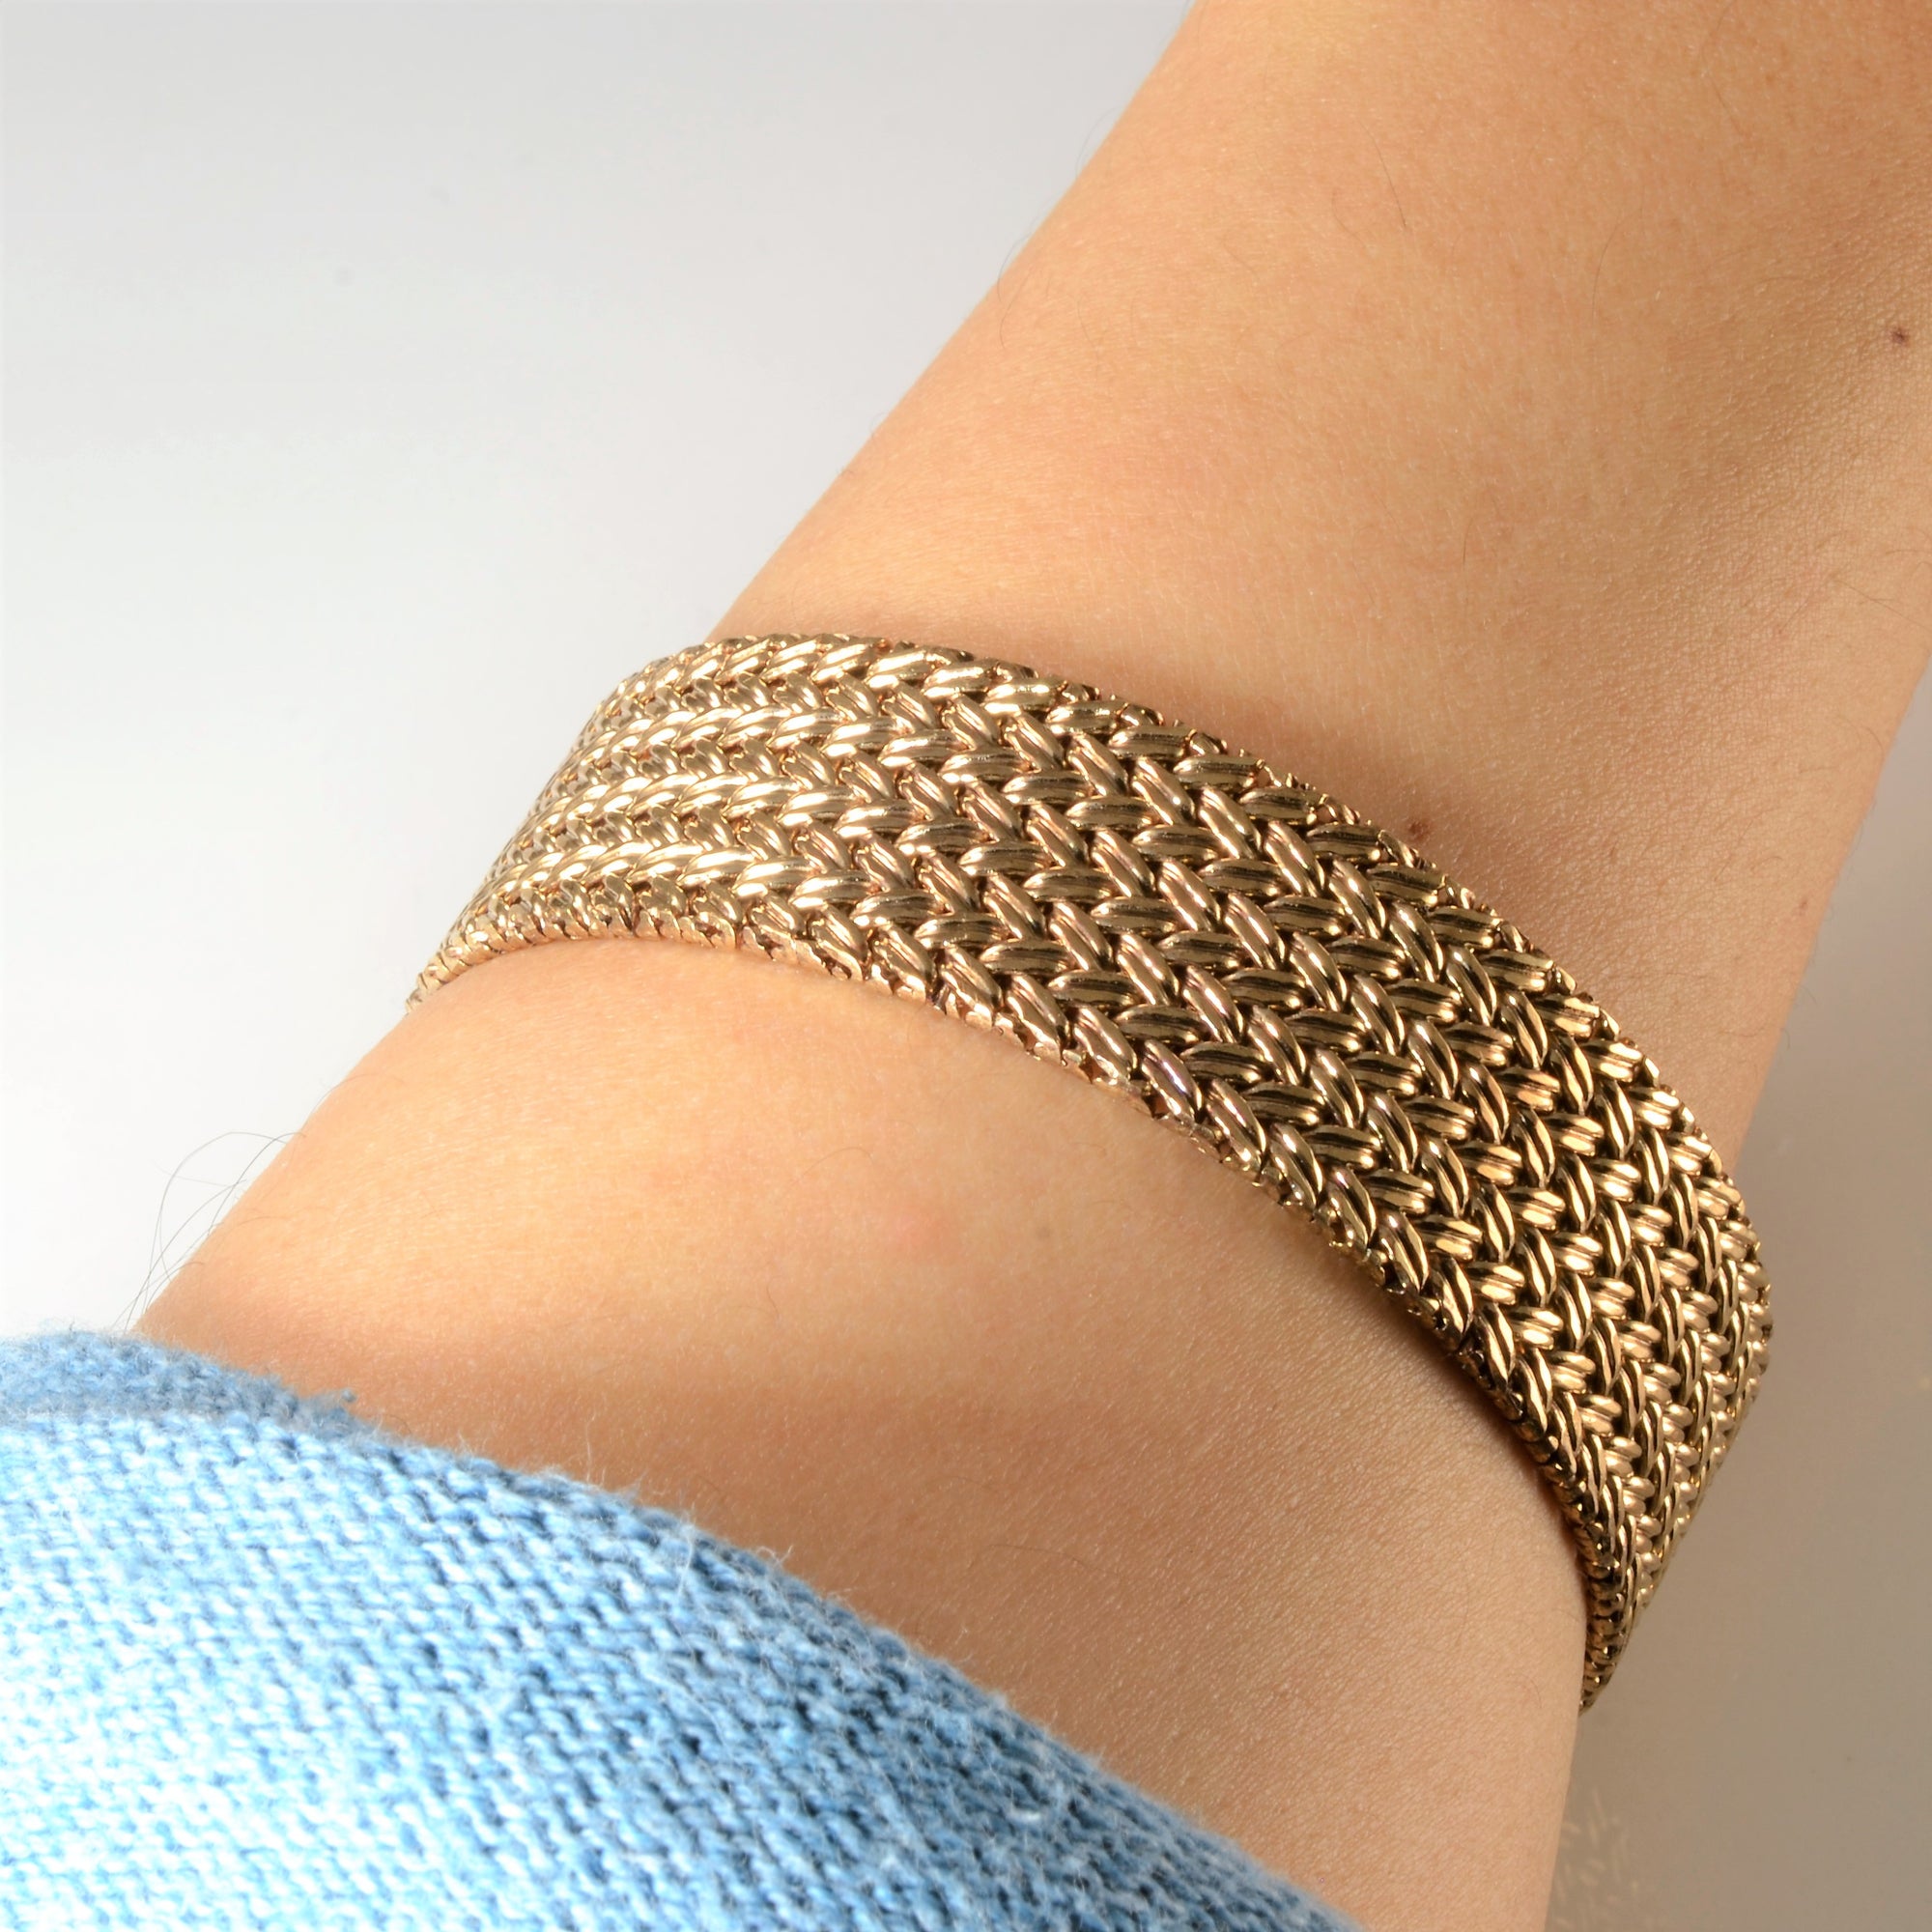 Birks' Woven Gold Bracelet | 8